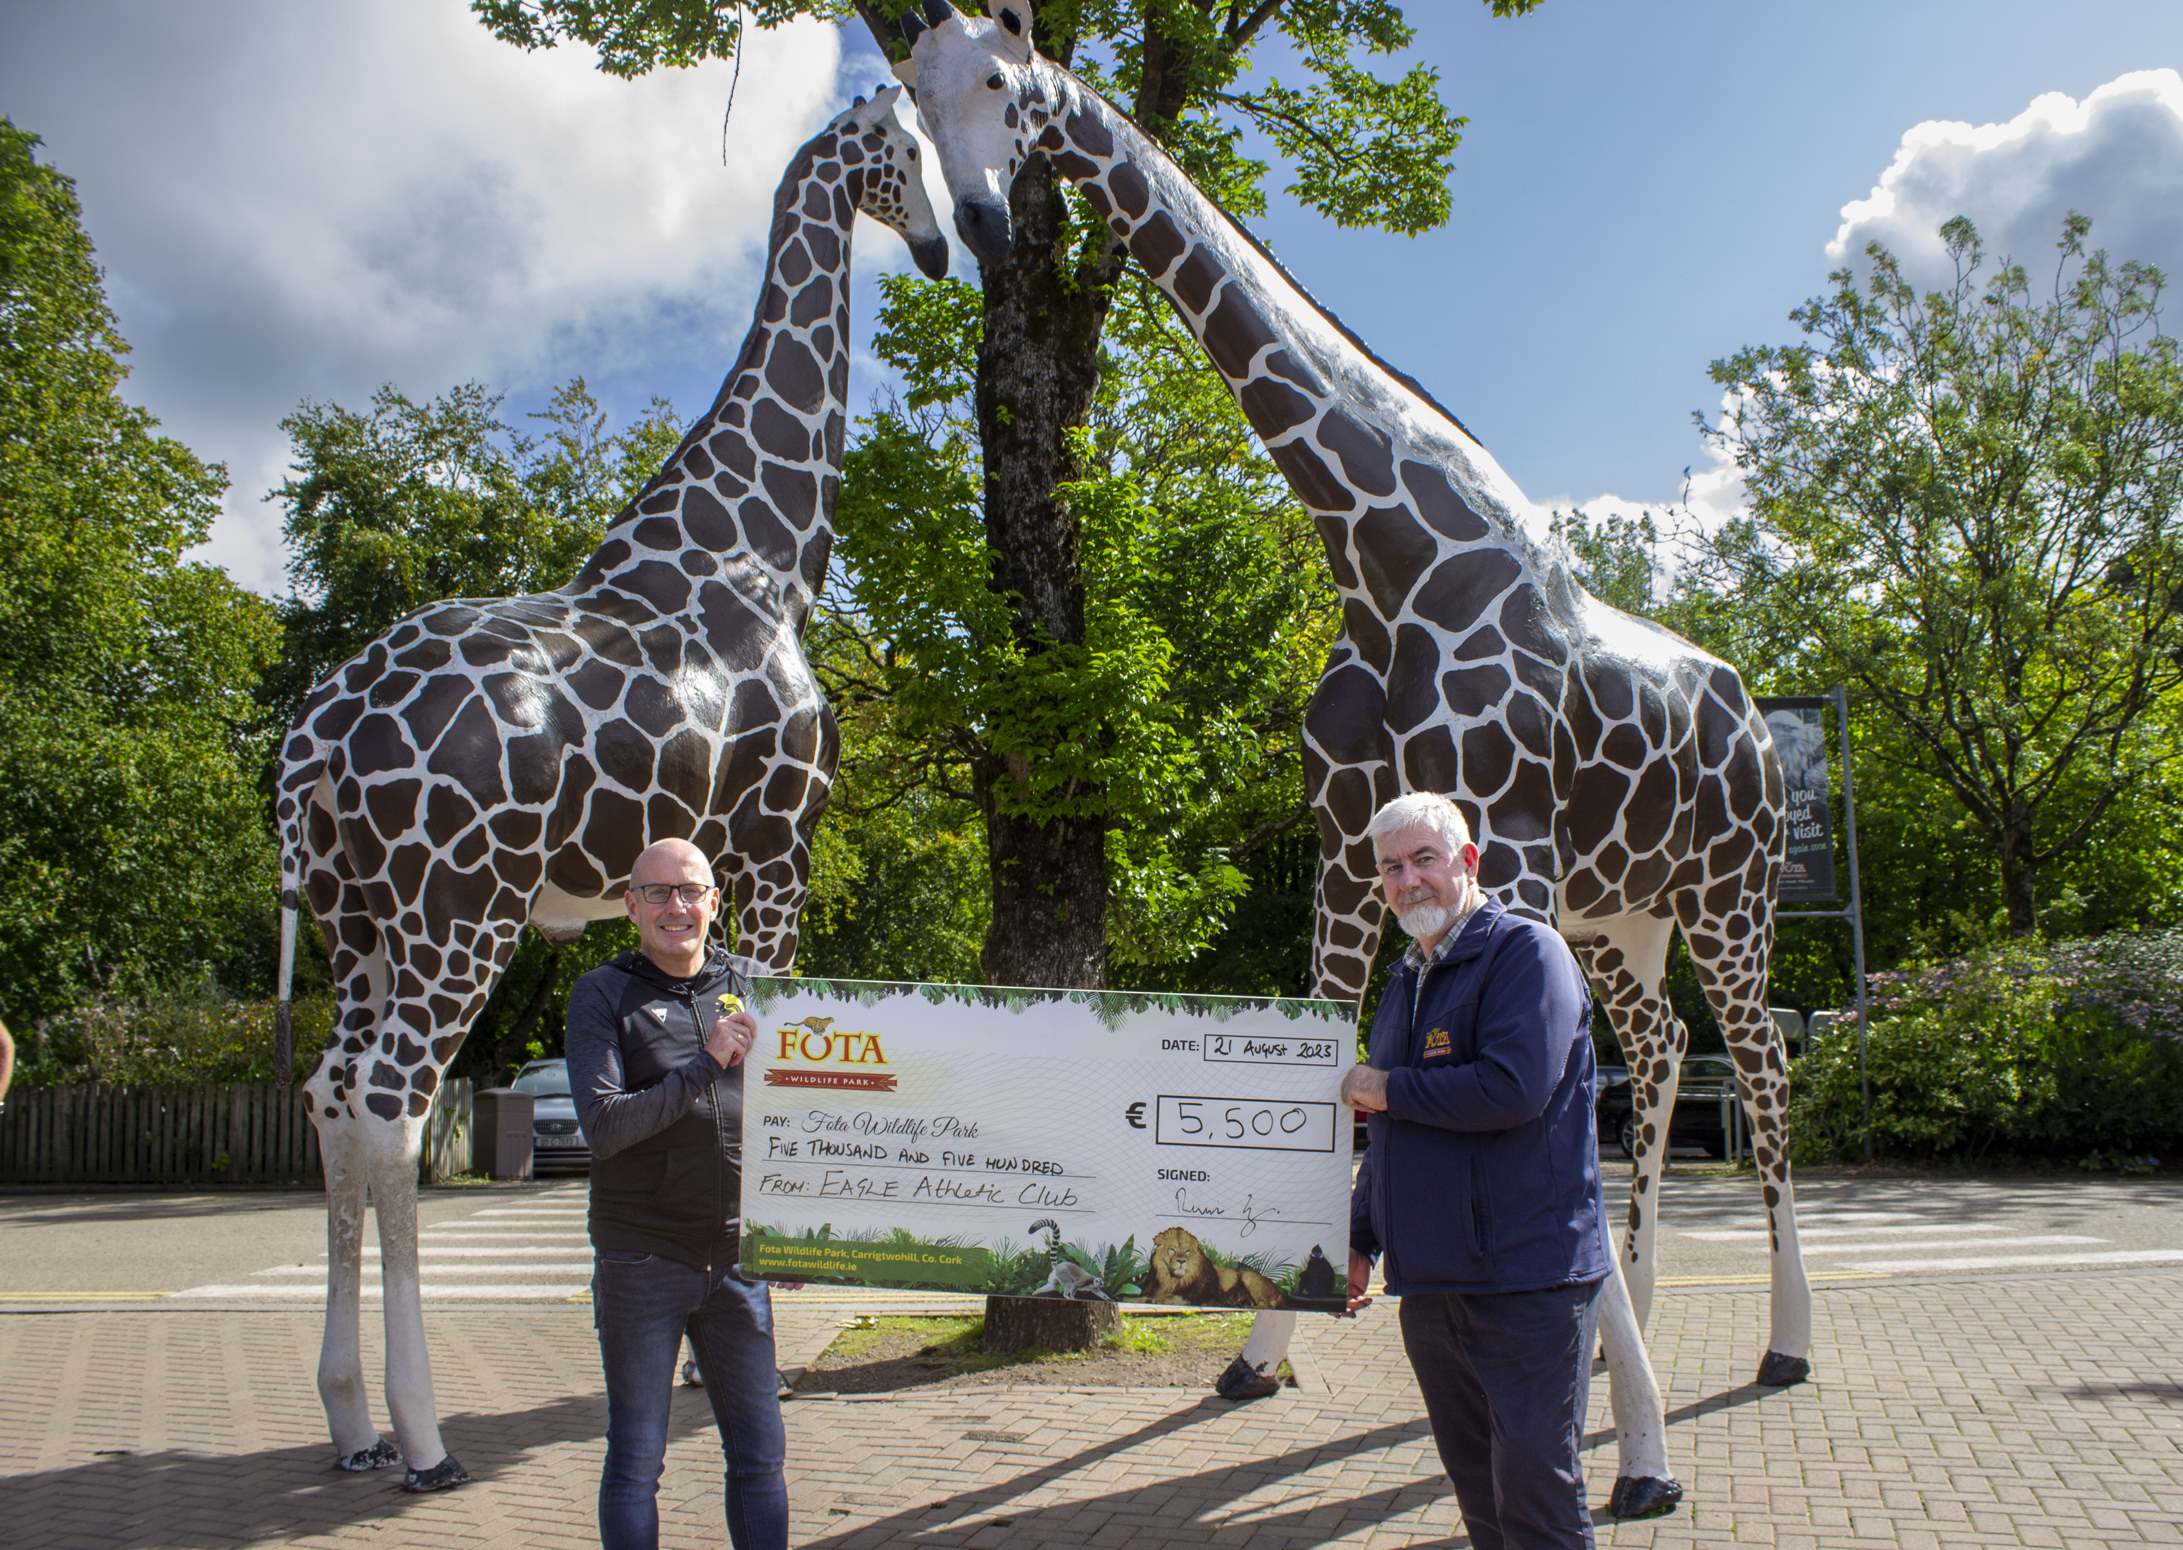 Eagle Athletic Club Donates €5,500 to Fota Wildlife Park for Giraffe Conservsation